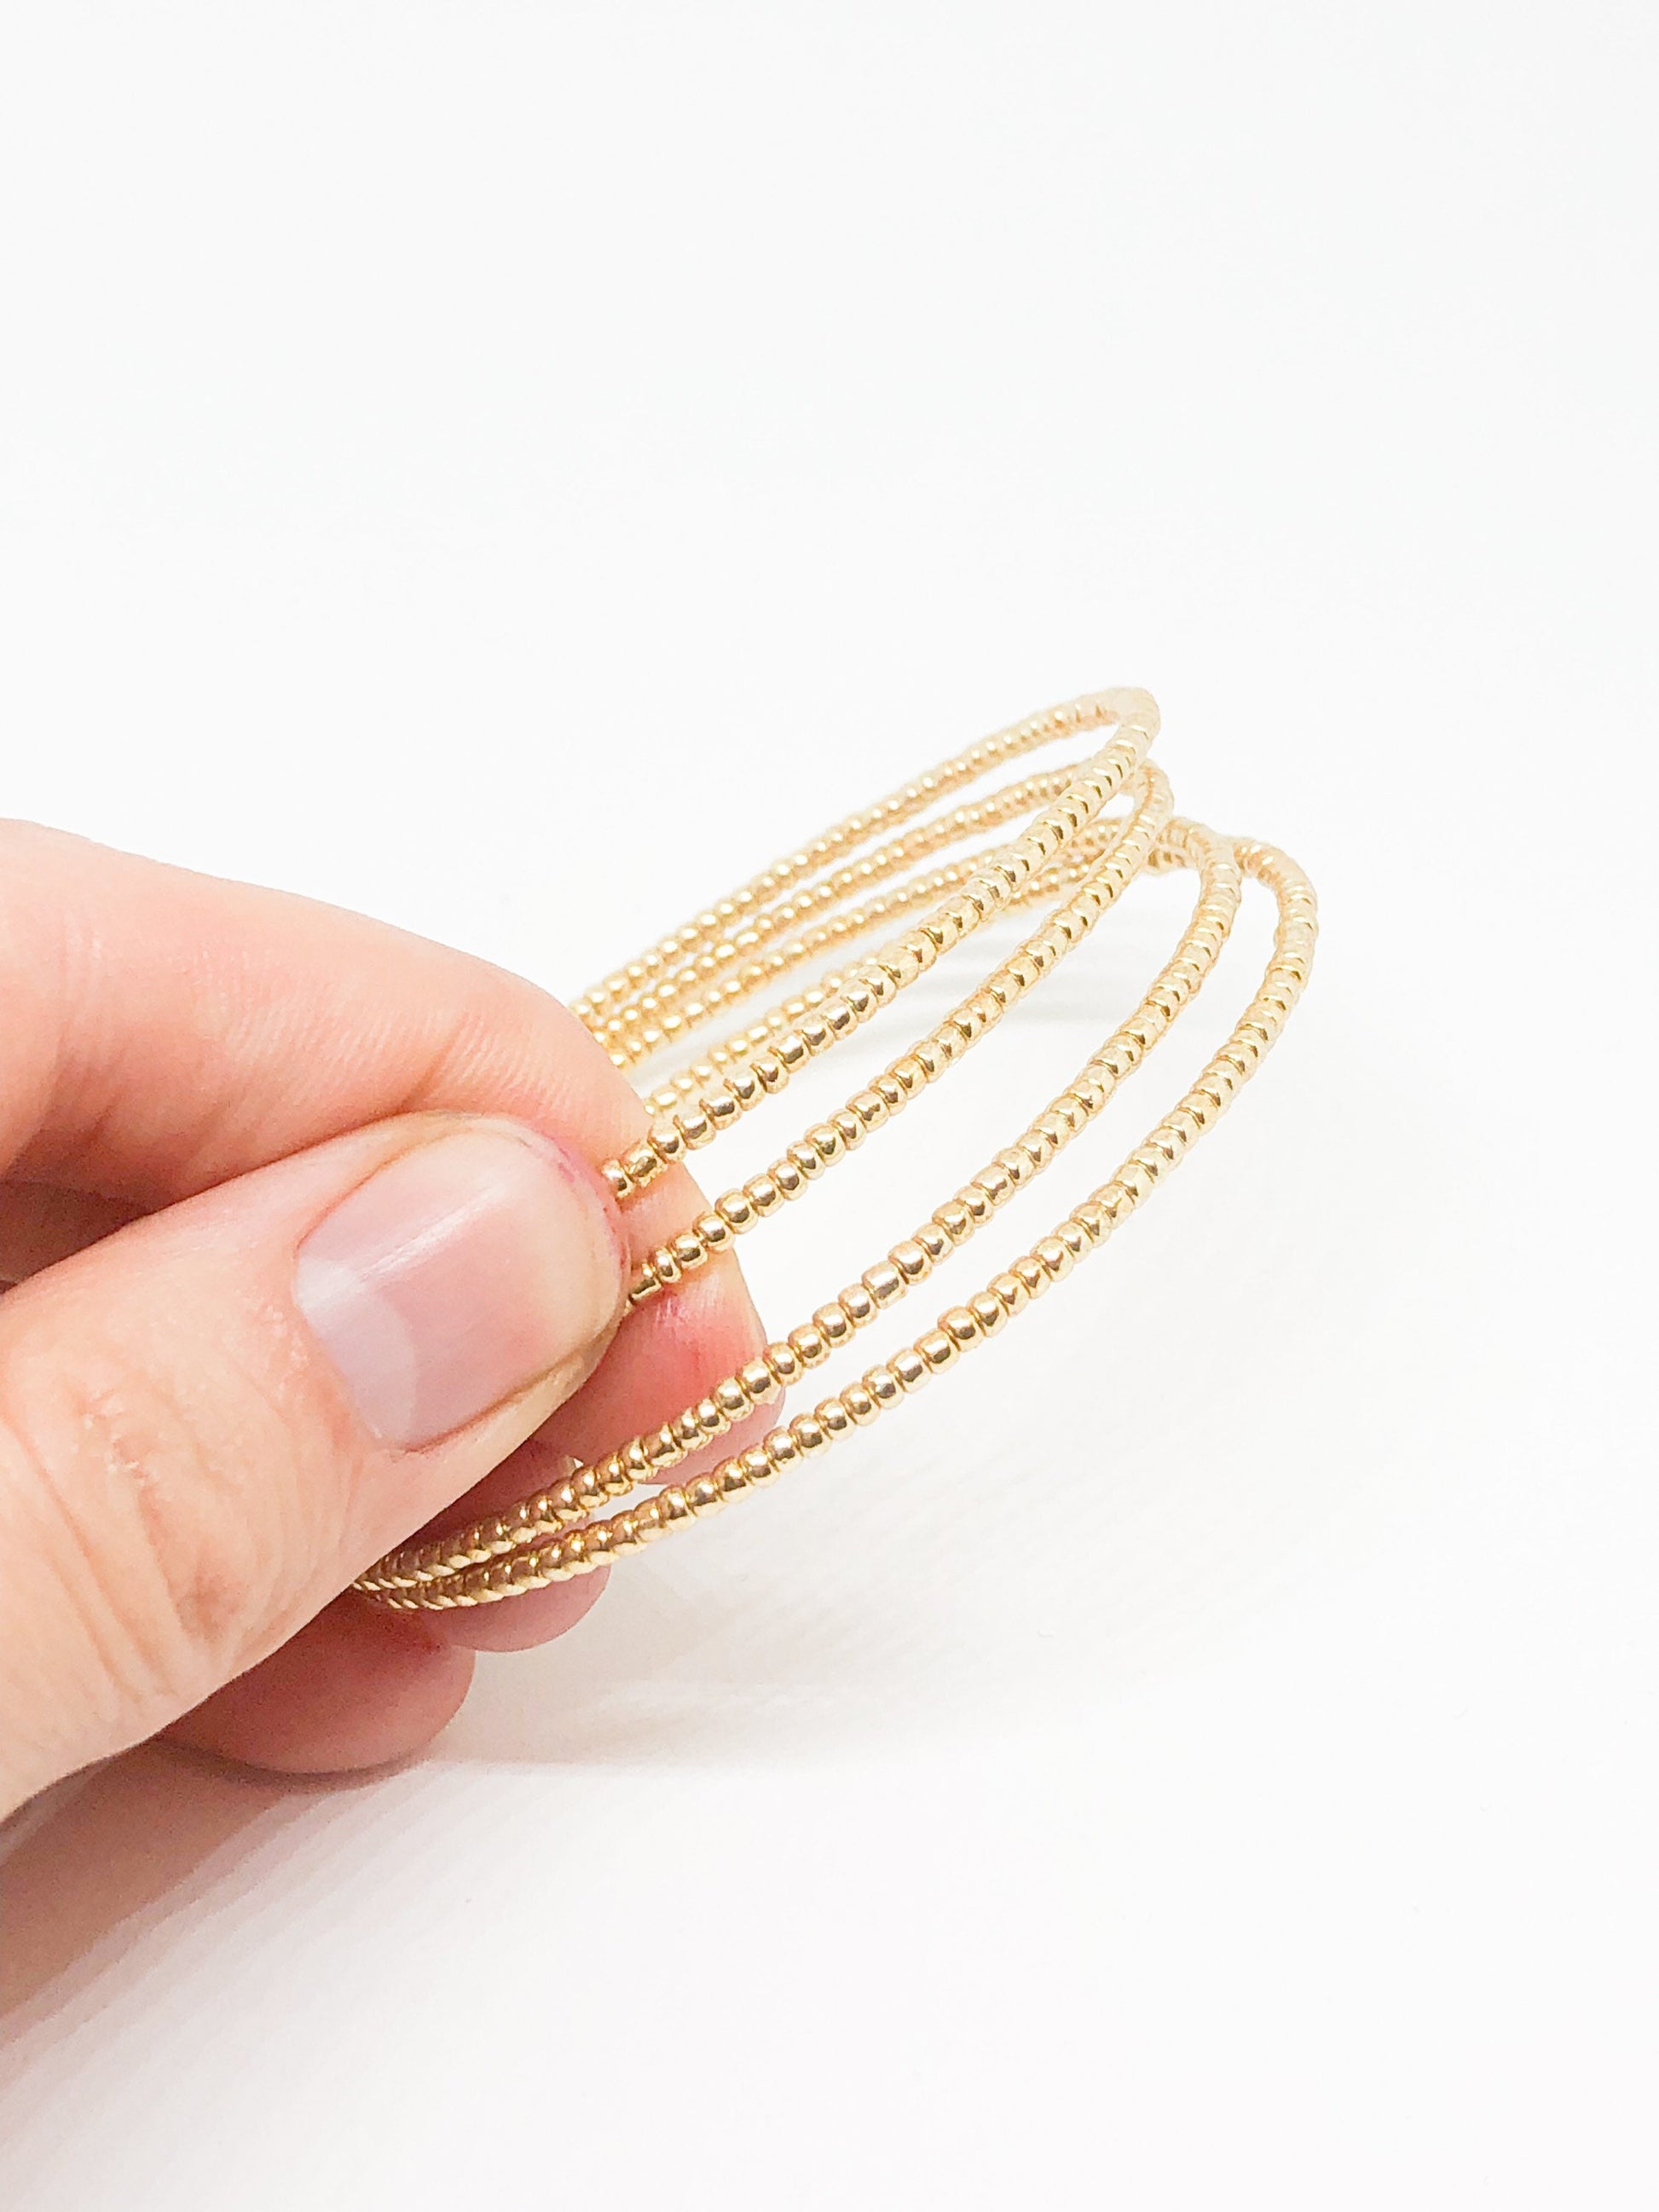 Ximalun 600 loops jewelry wire memory beading wire memory bracelet